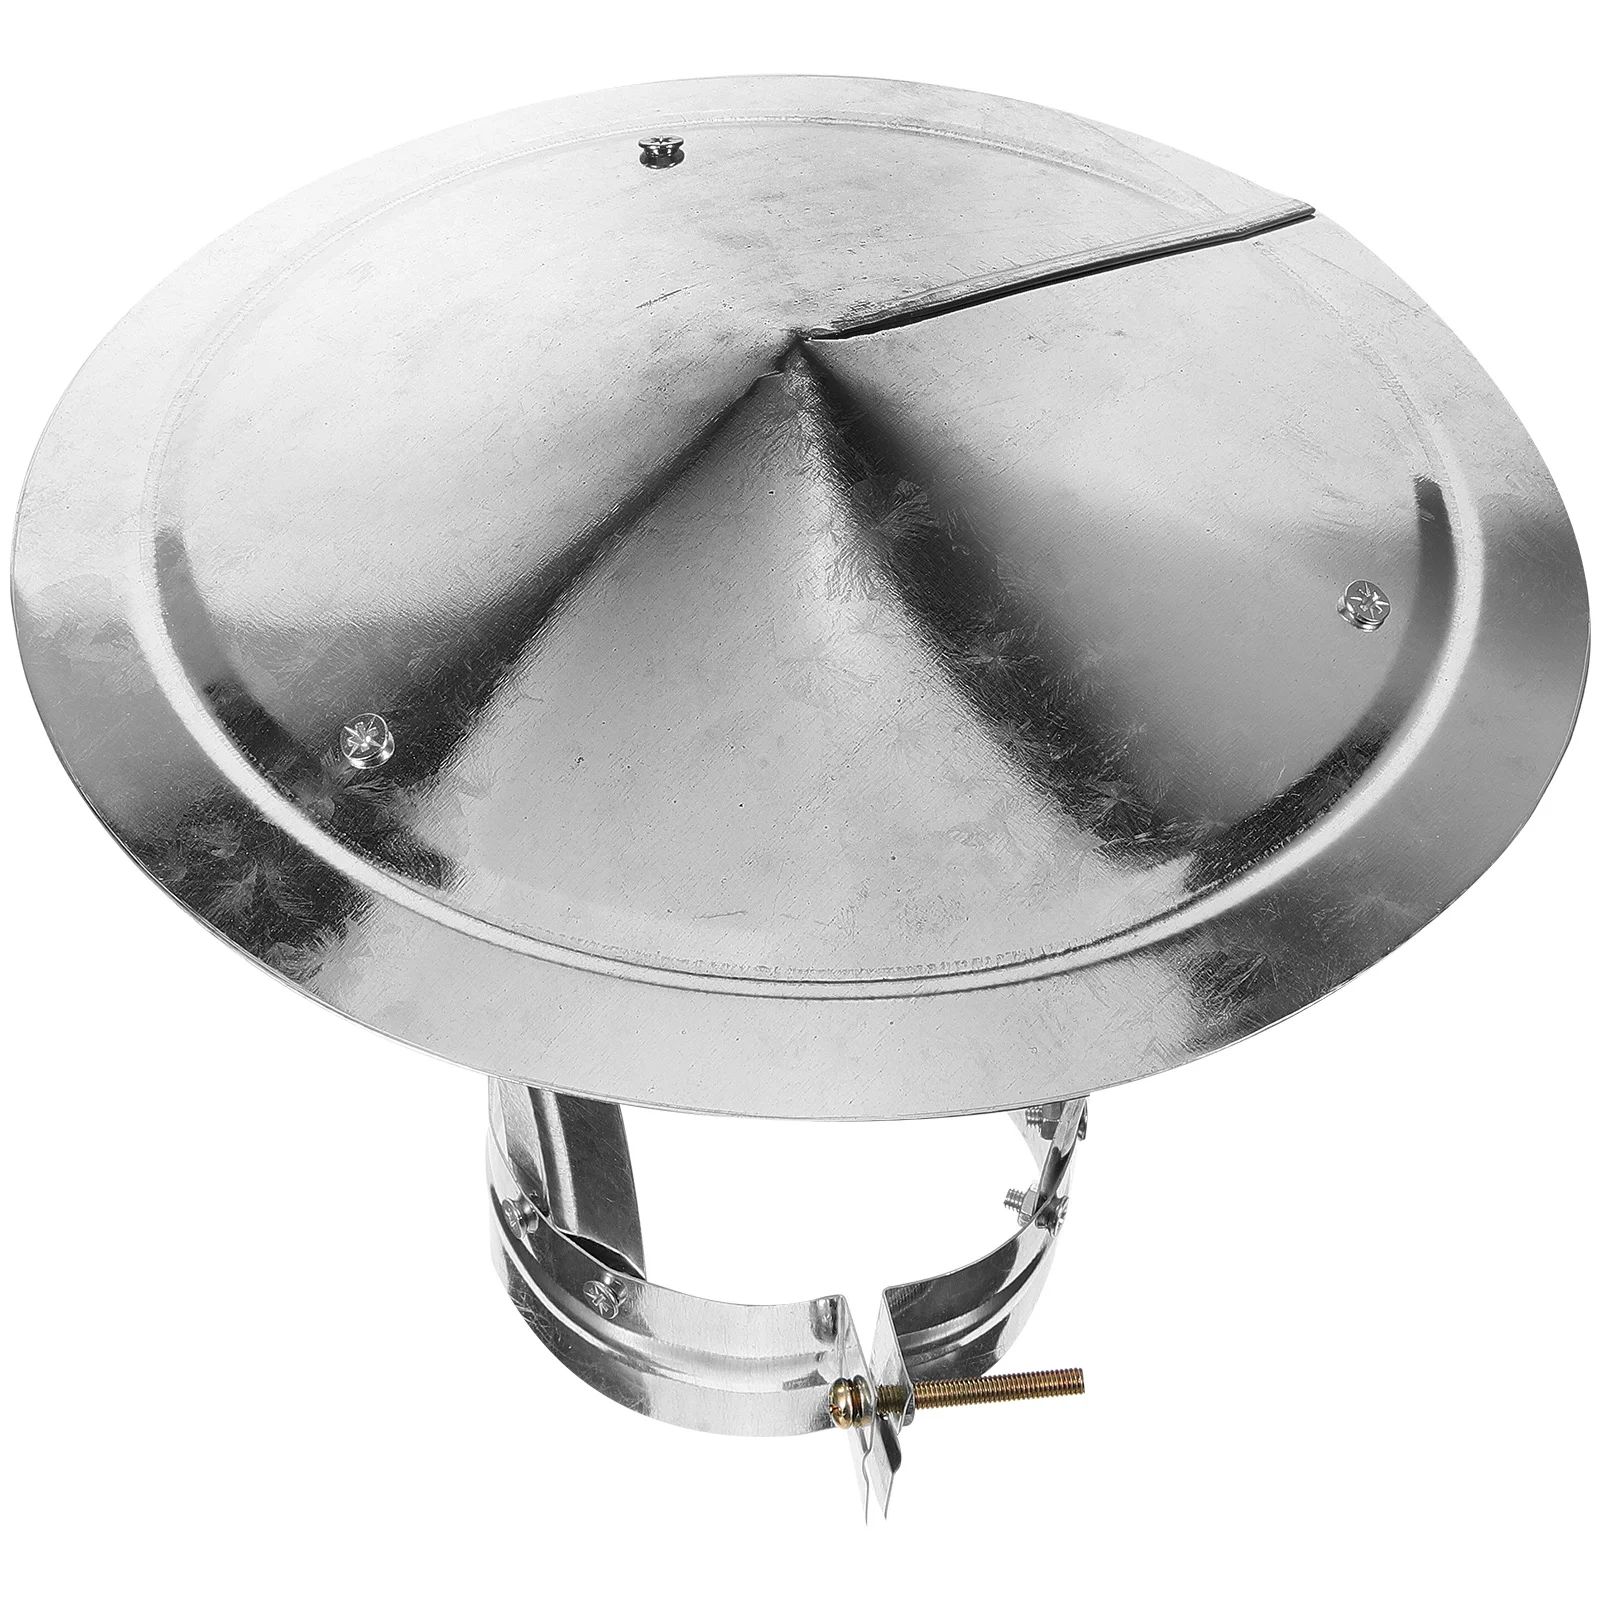 

Exhaust Pipe Chimney Flashing Cap Ducting Ventilation Cover Rain Protector Weatherproof Metal